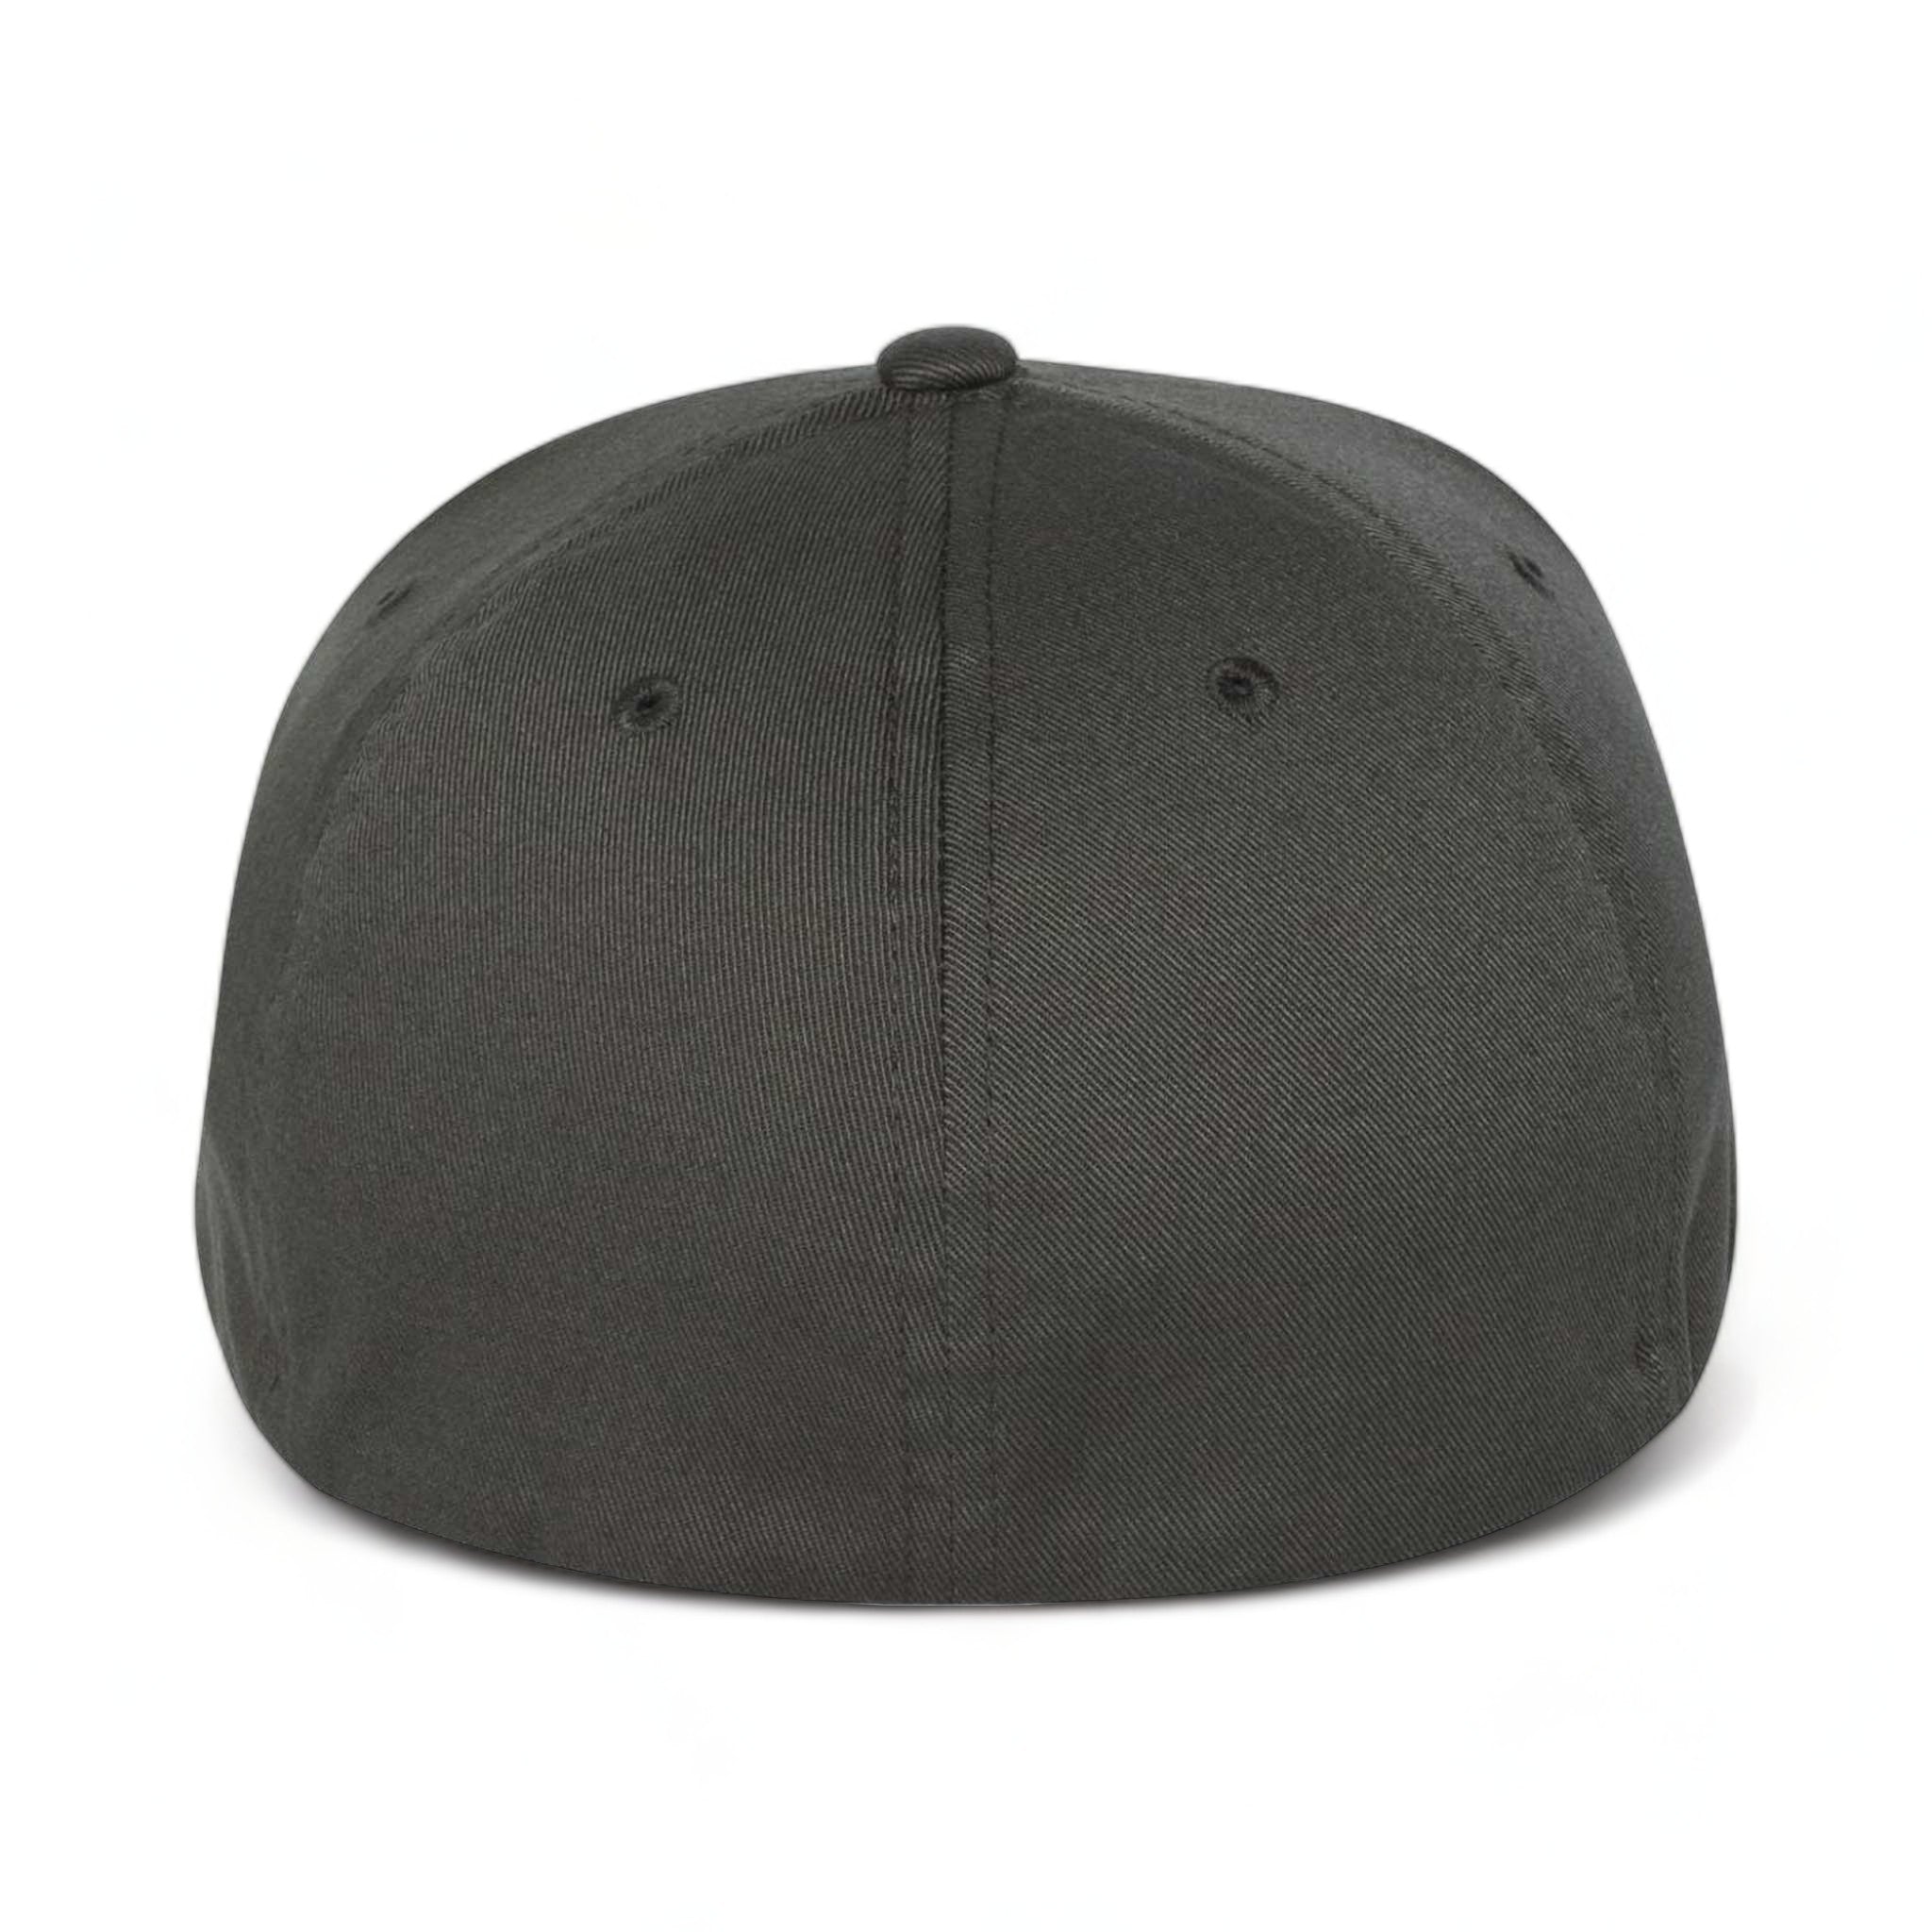 Back view of Flexfit 6297f custom hat in dark grey